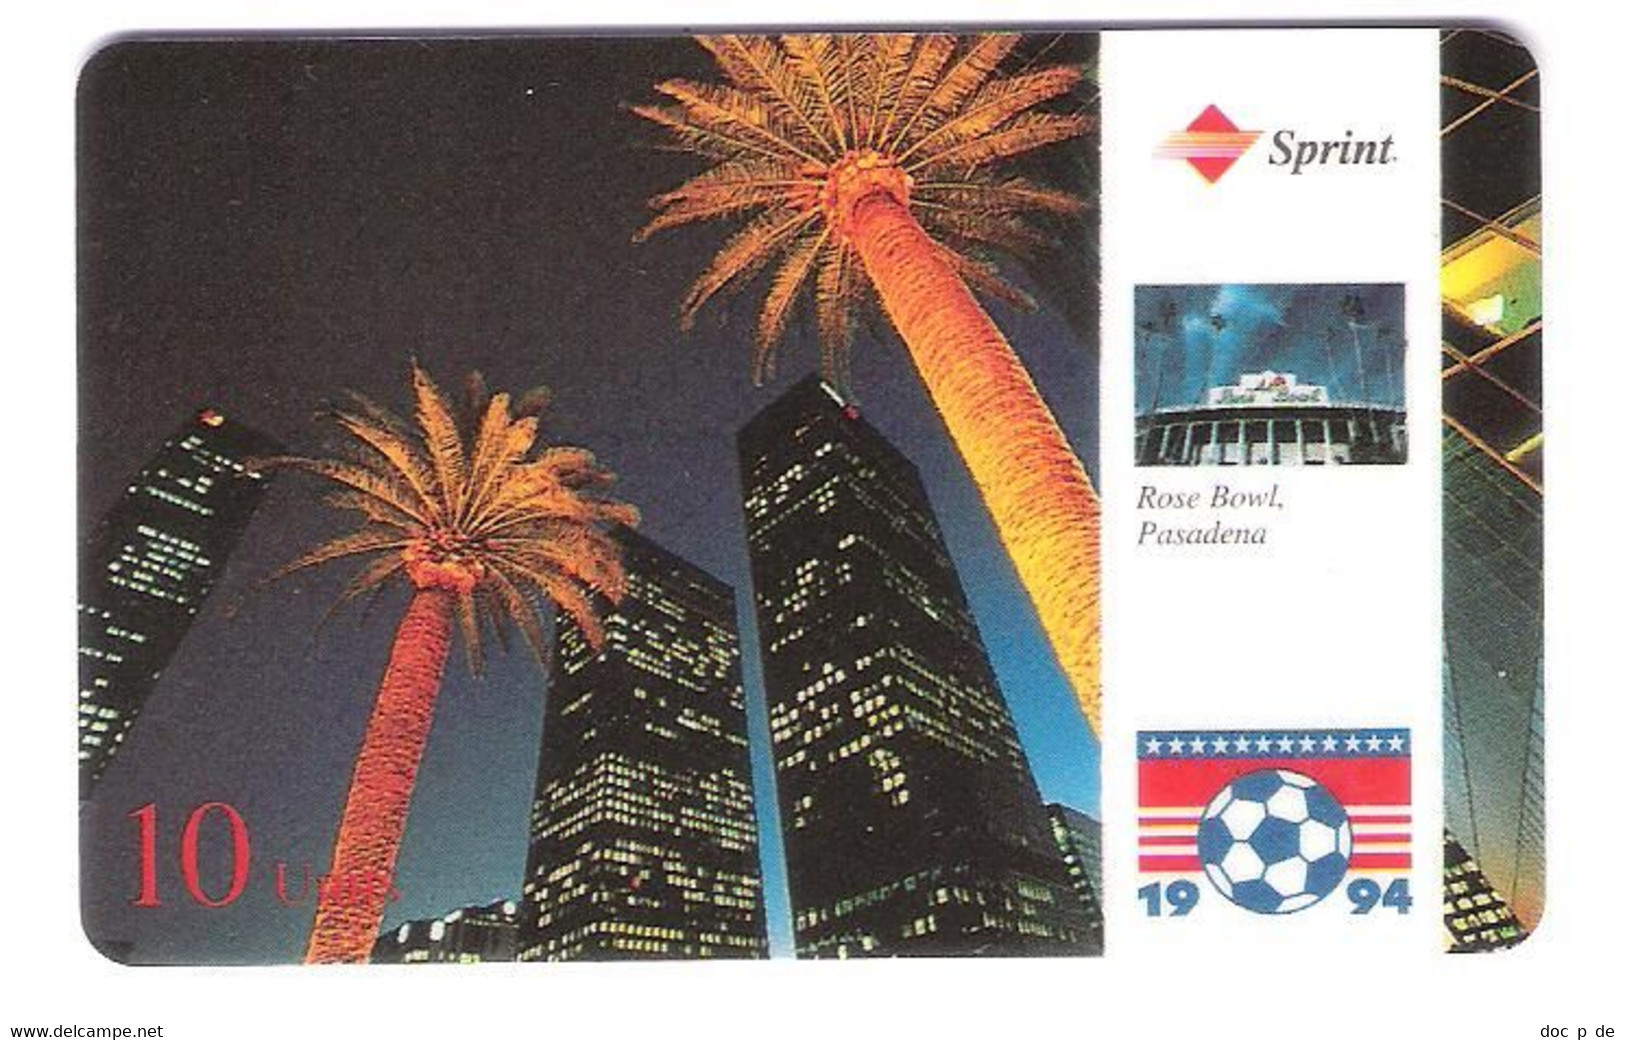 USA - Prepaid Card - Sprint - Football - Fussball - Soccer World Cup USA 94  - Rose Bowl Pasadena - Sprint